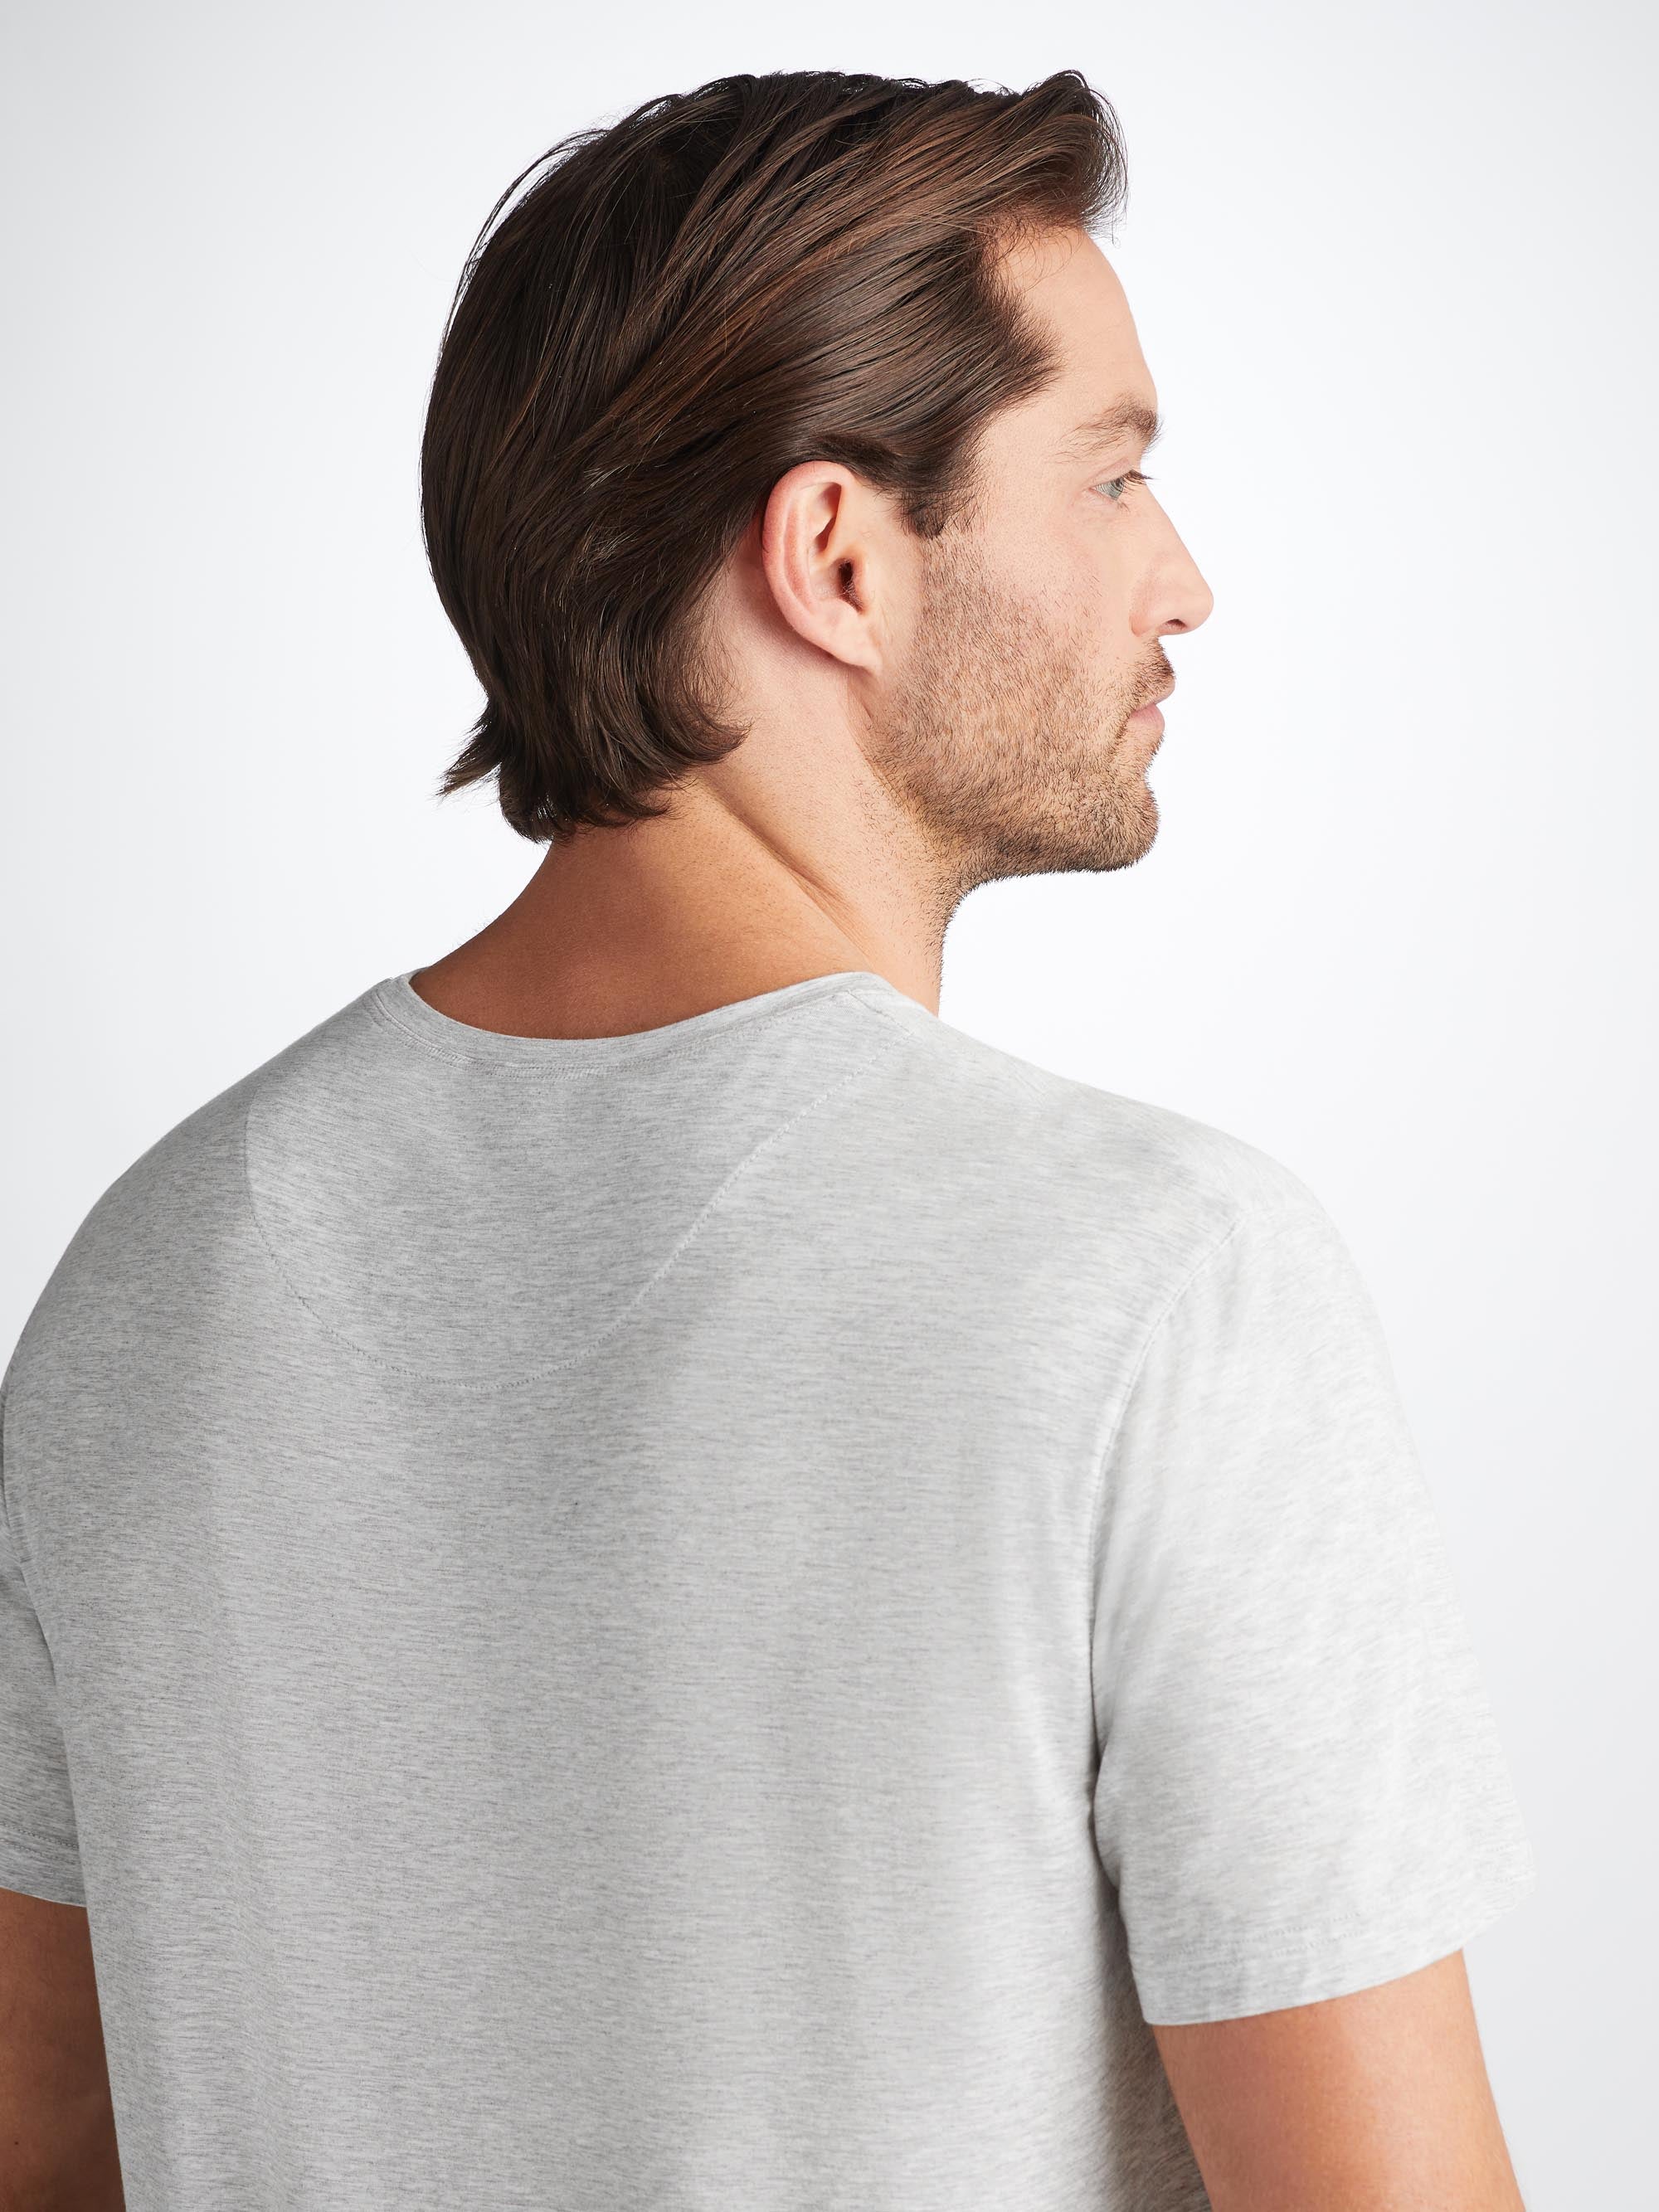 Men's T-Shirt Ethan Micro Modal Stretch Silver